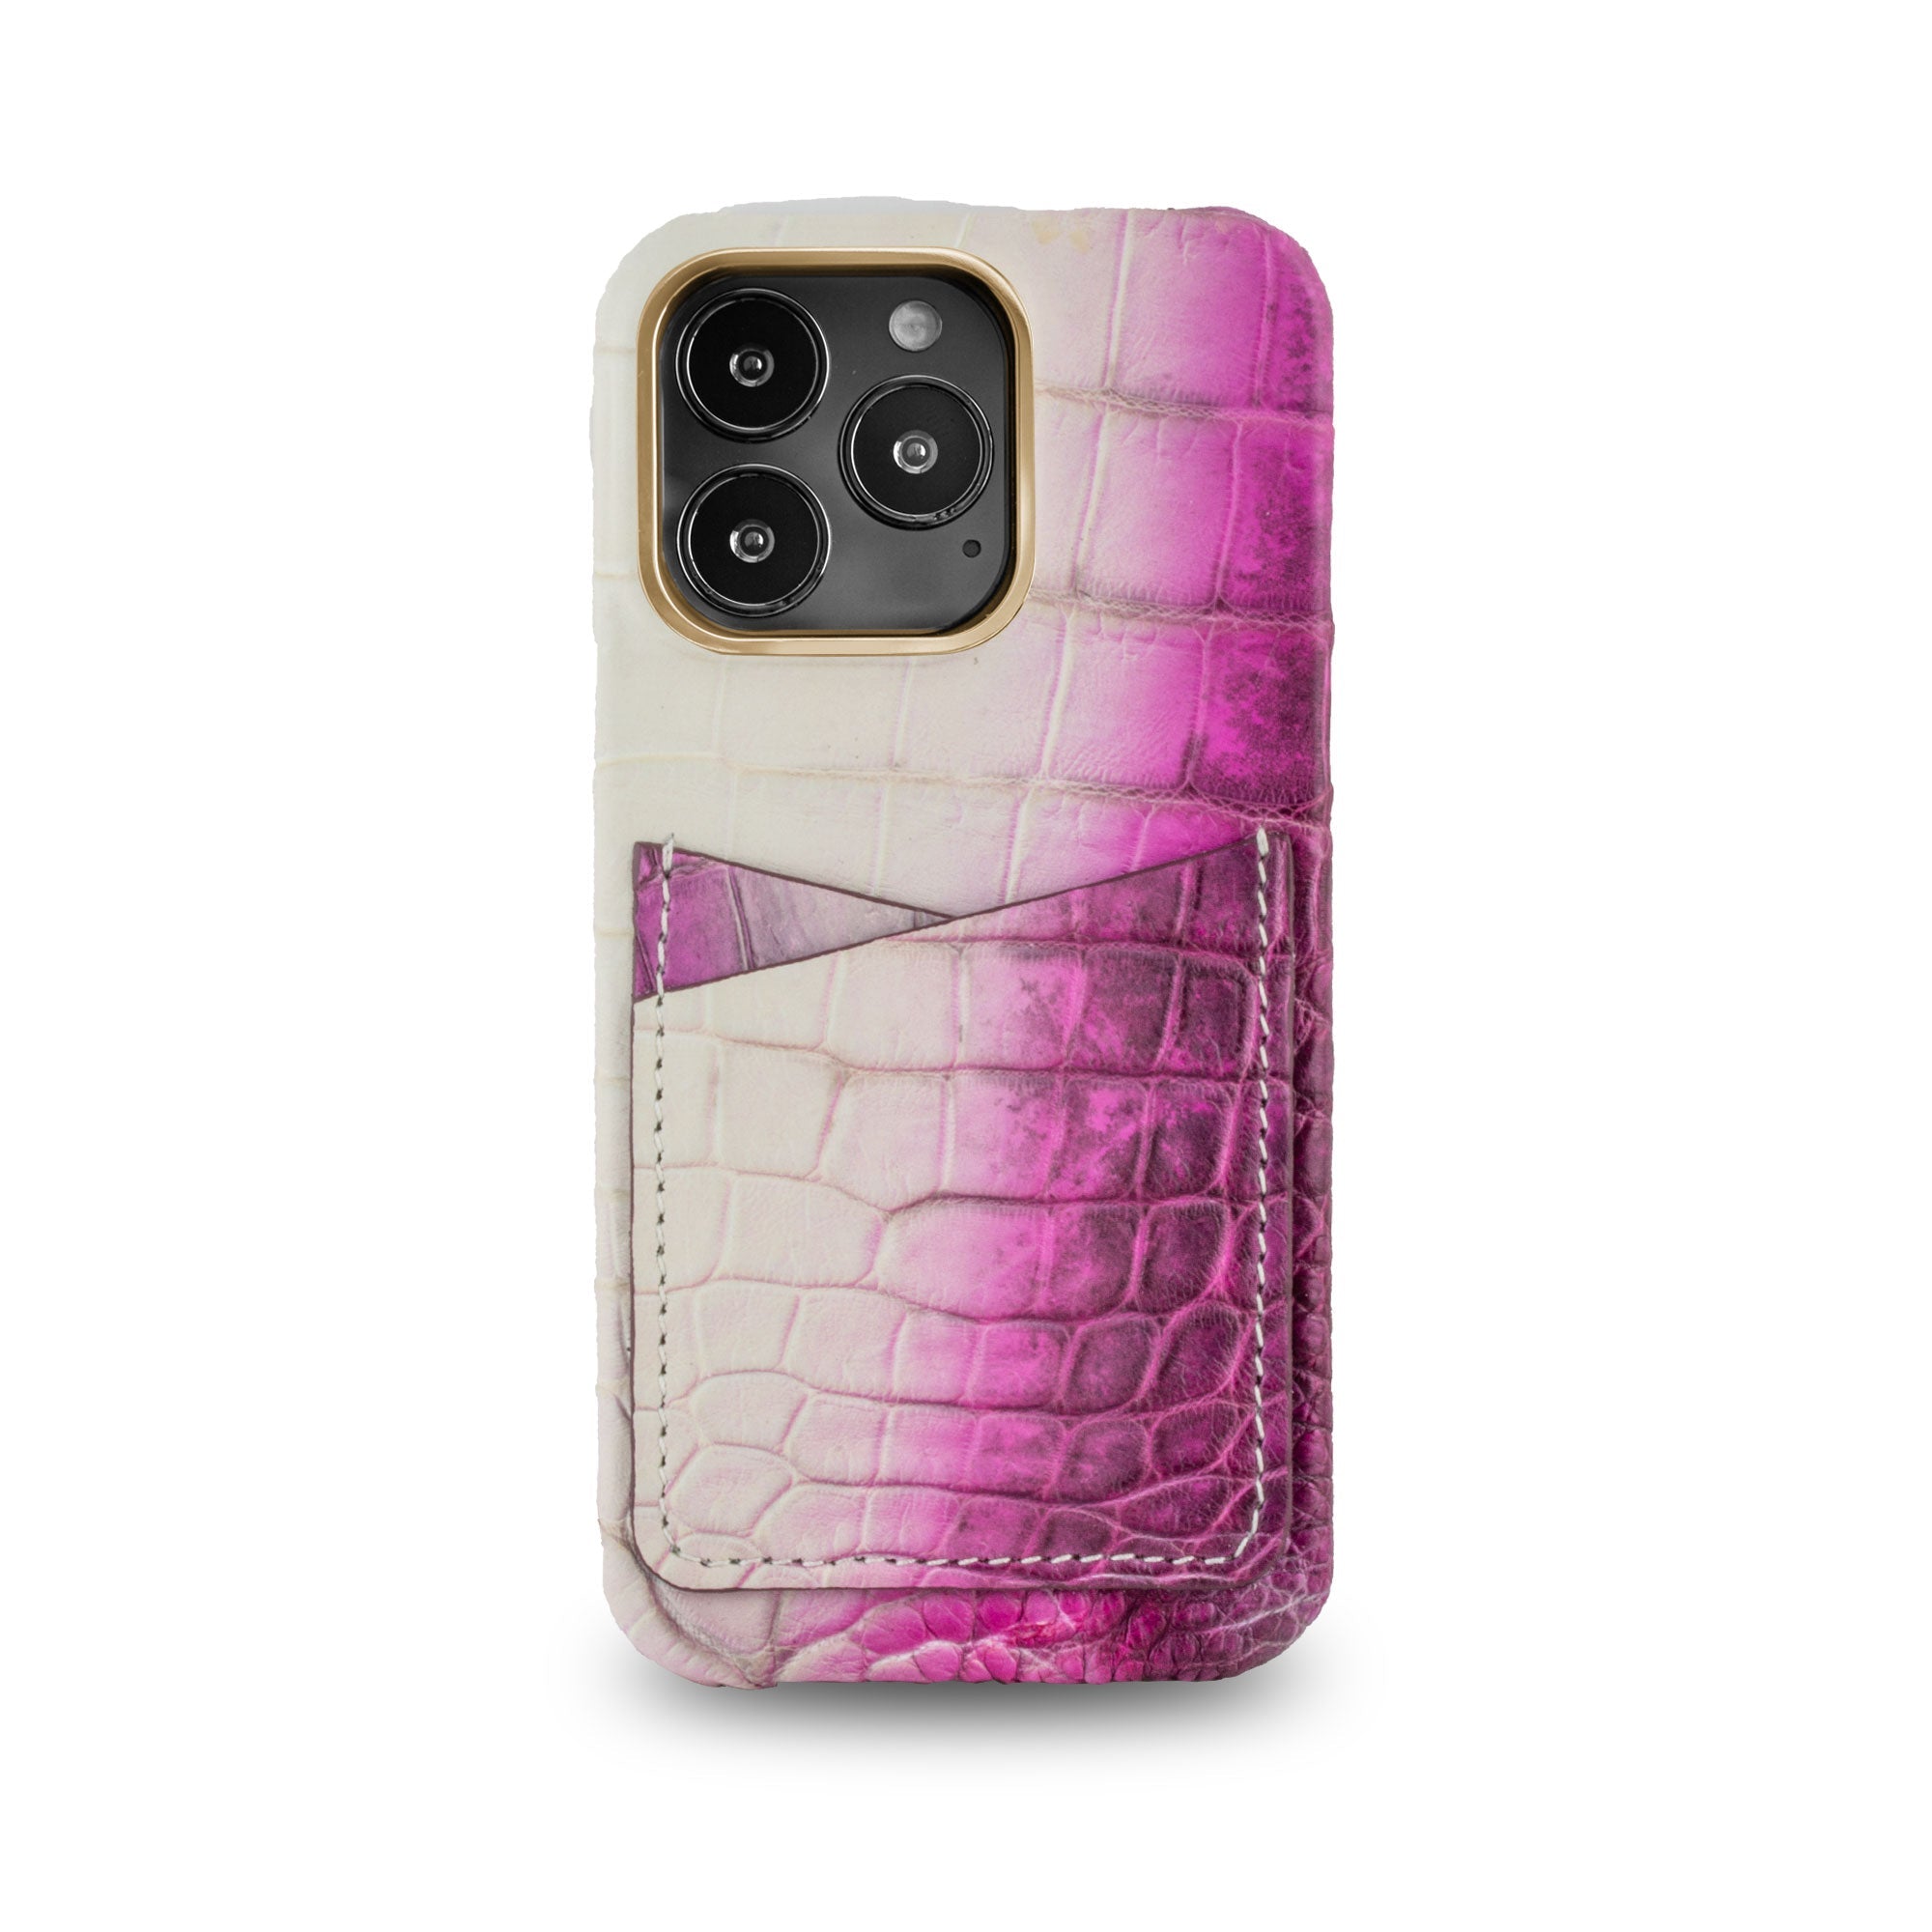 Coque cuir " Card case " Himalaya pour iPhone 15, 14 & 13 ( Pro / Pro Max ) - Alligator / Crocodile